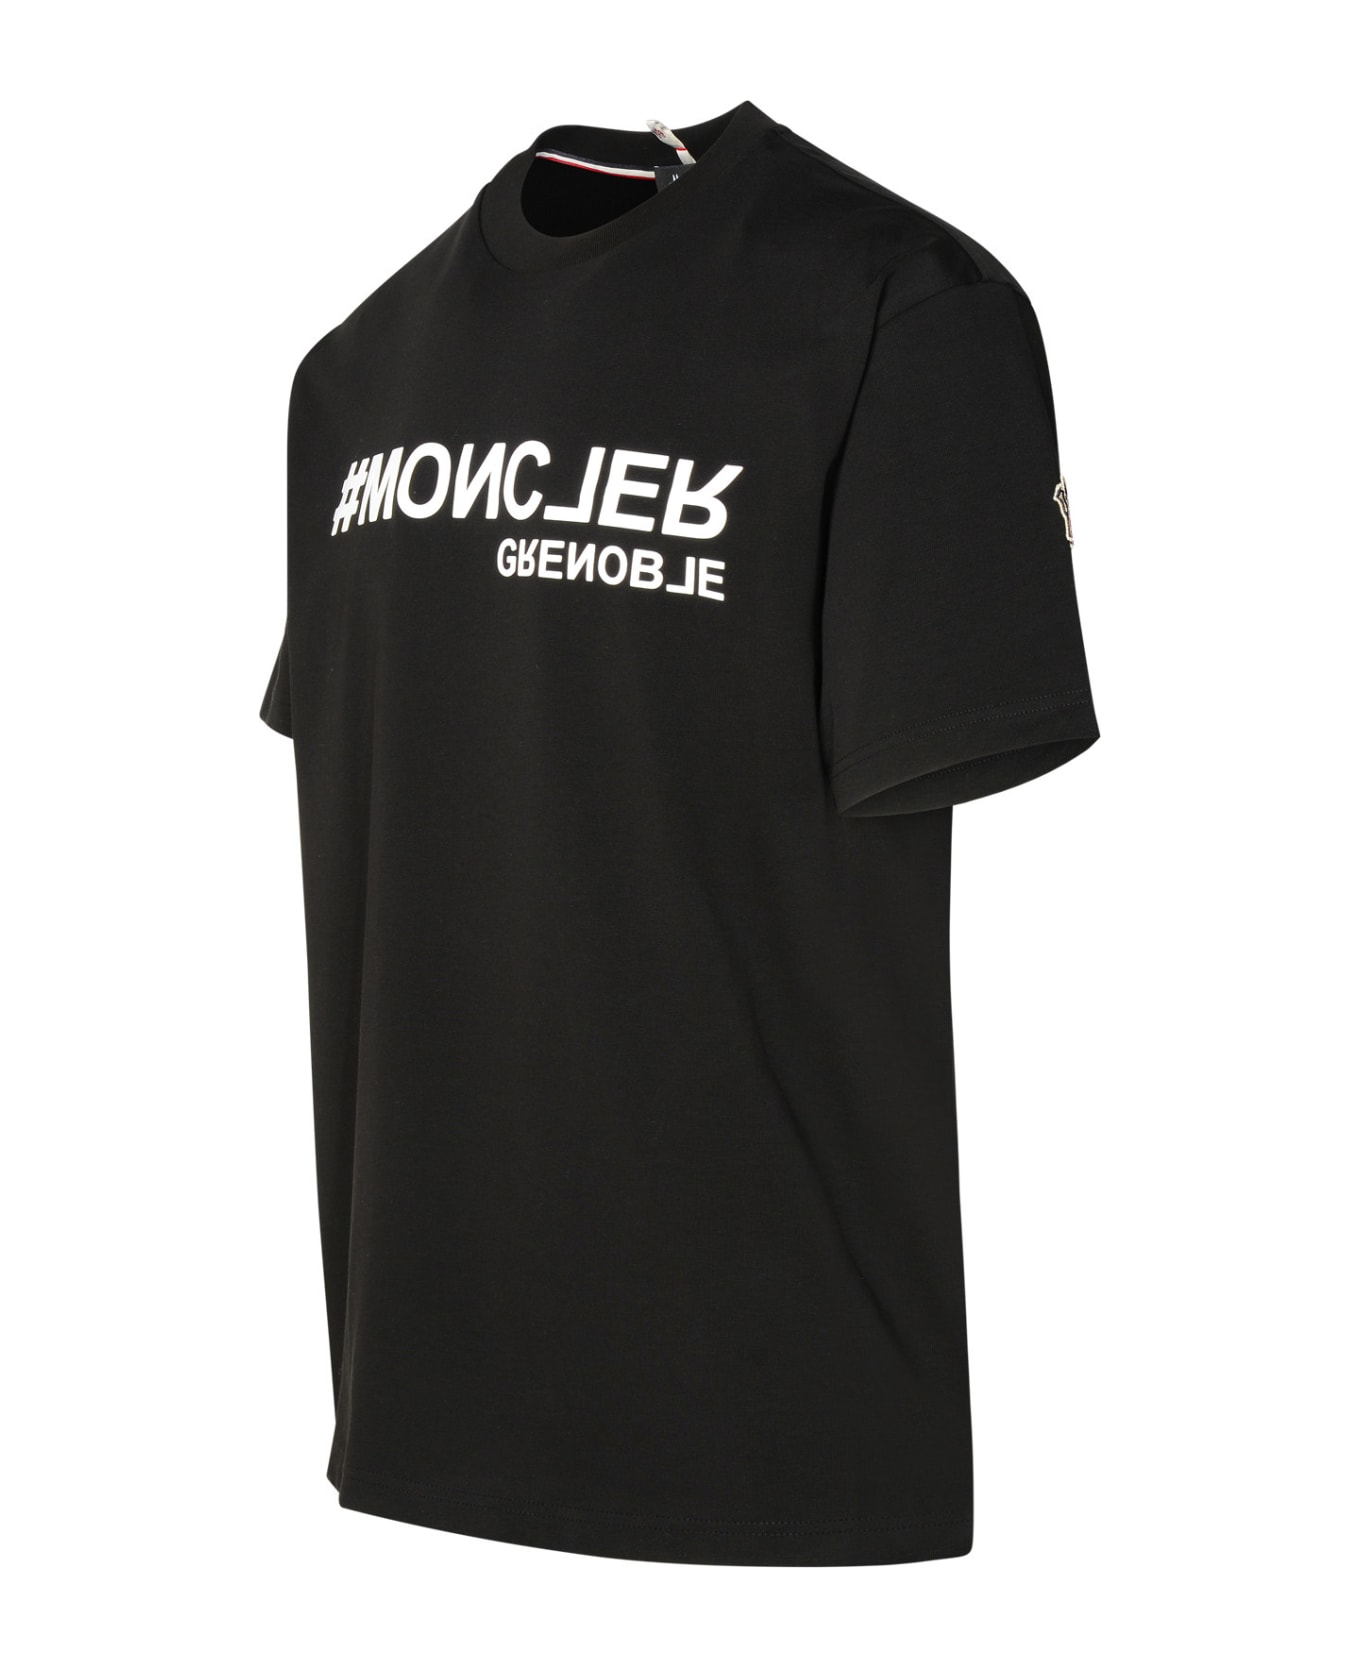 Moncler Grenoble Black Cotton T-shirt - Black